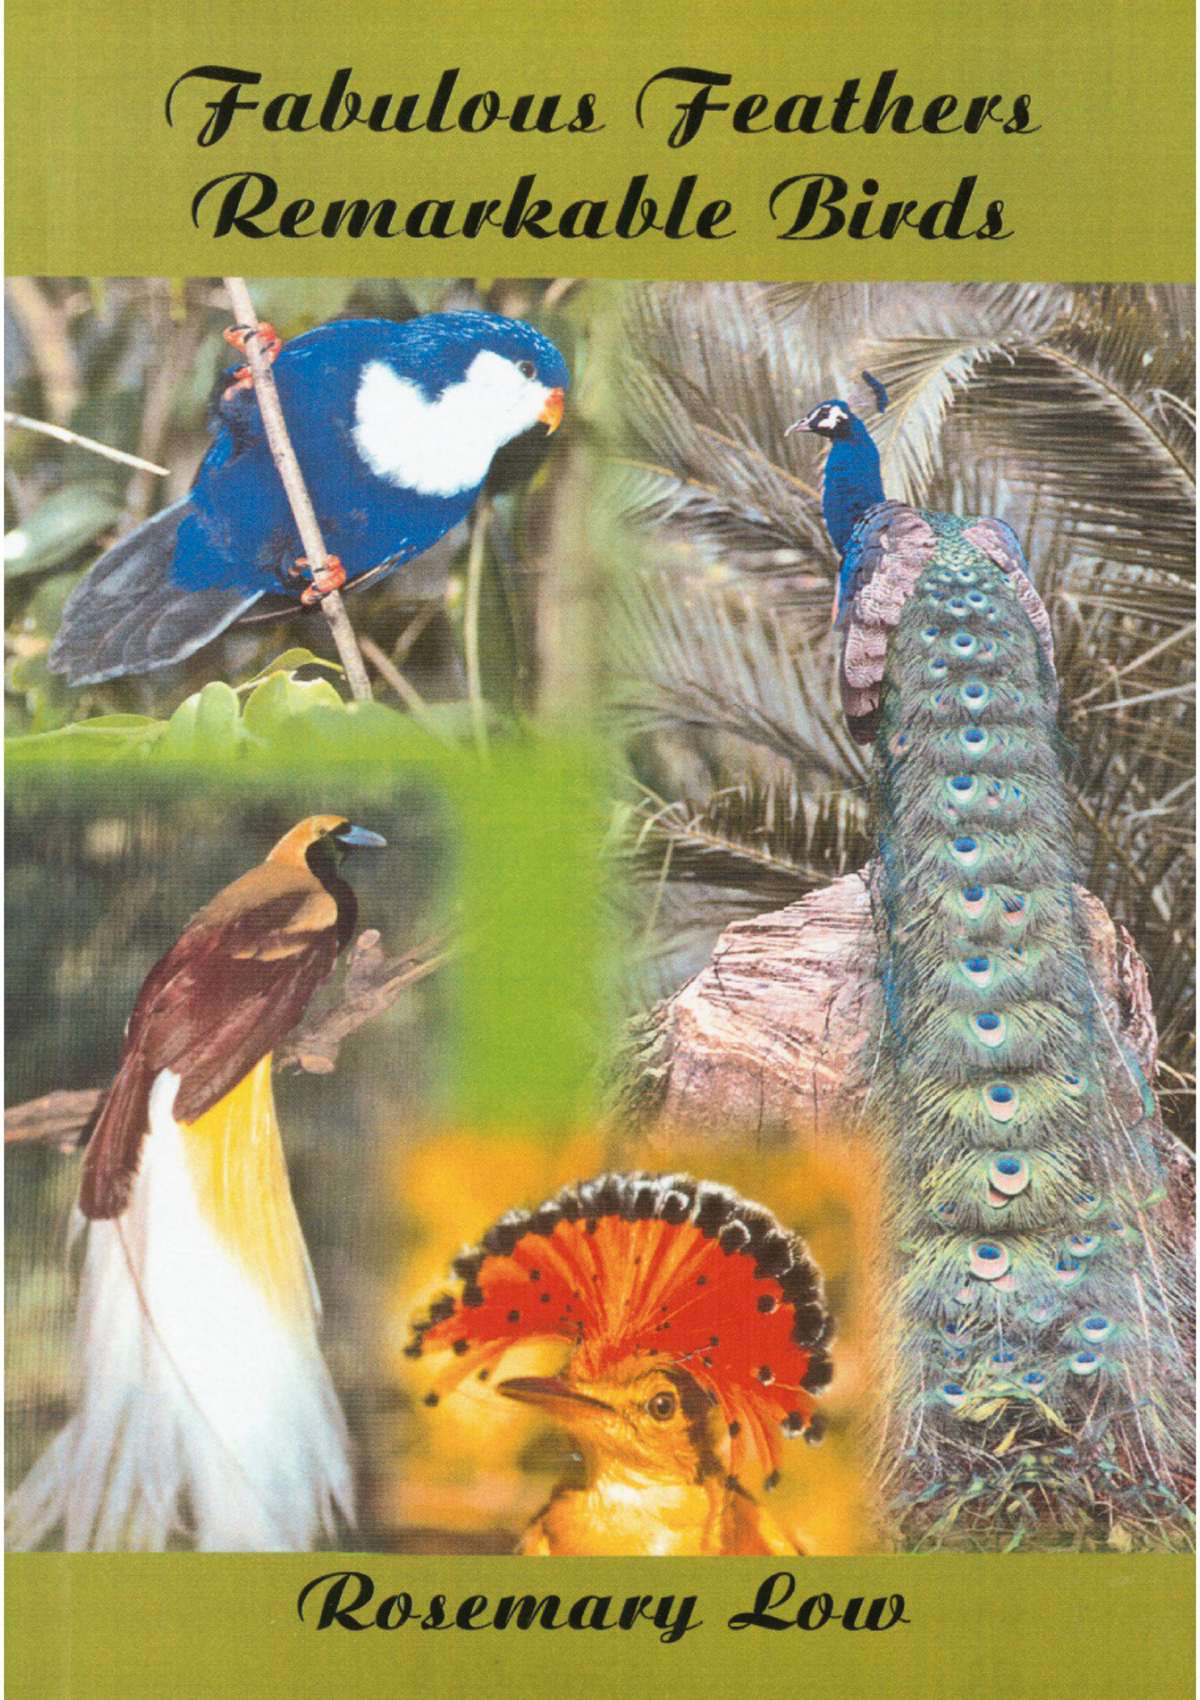 3734 - Fabulous Feathers, Remarkable Birds